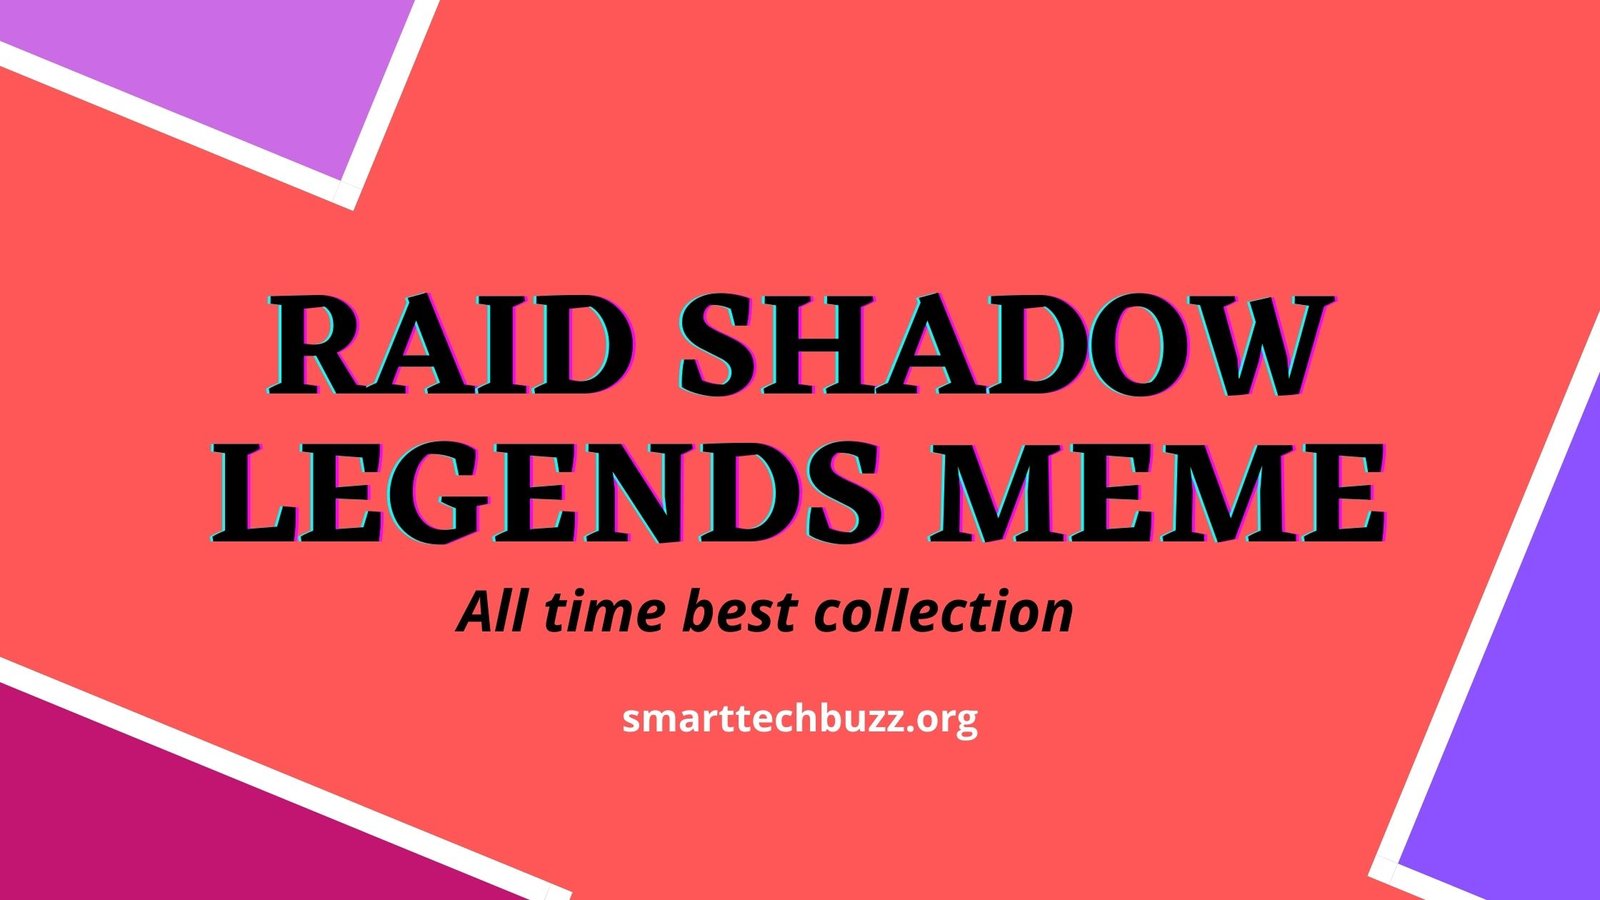 raid shadow legends meme ad